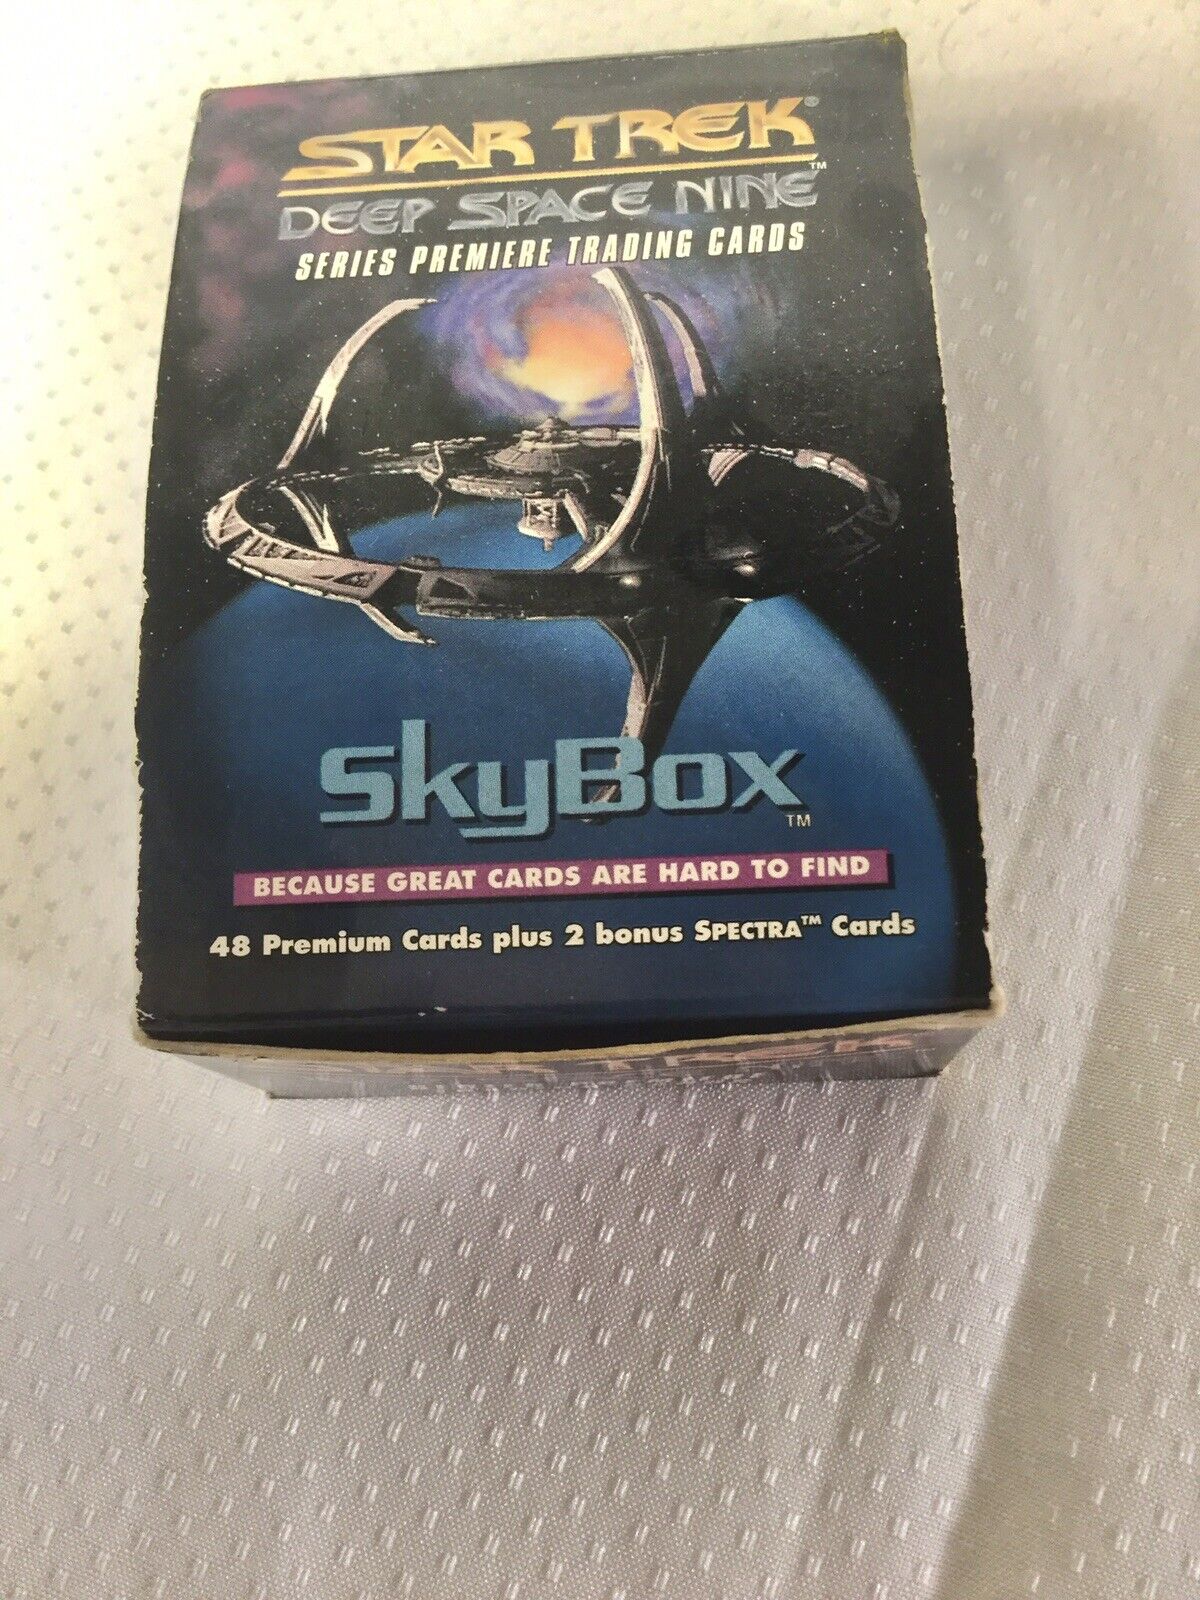 Star Trek Deep Space Nine Series Premium 1993 Skybox 48 premium card + 2 spectra